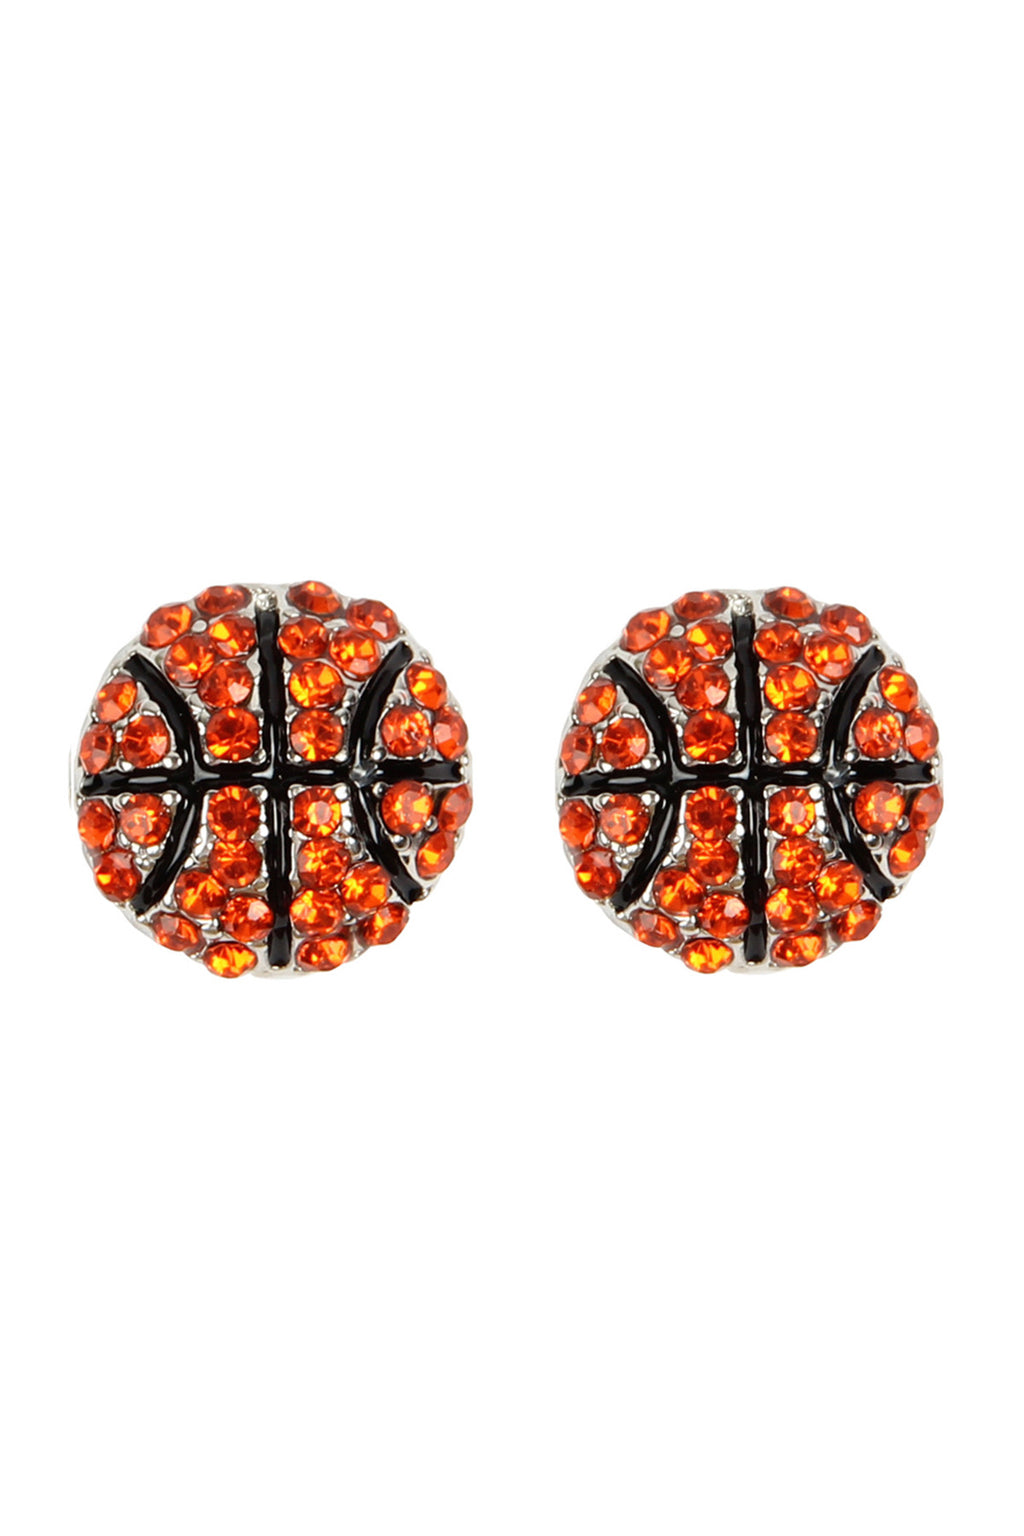 Basketball Rhinestone Post Earrings Orange - Pack of 6